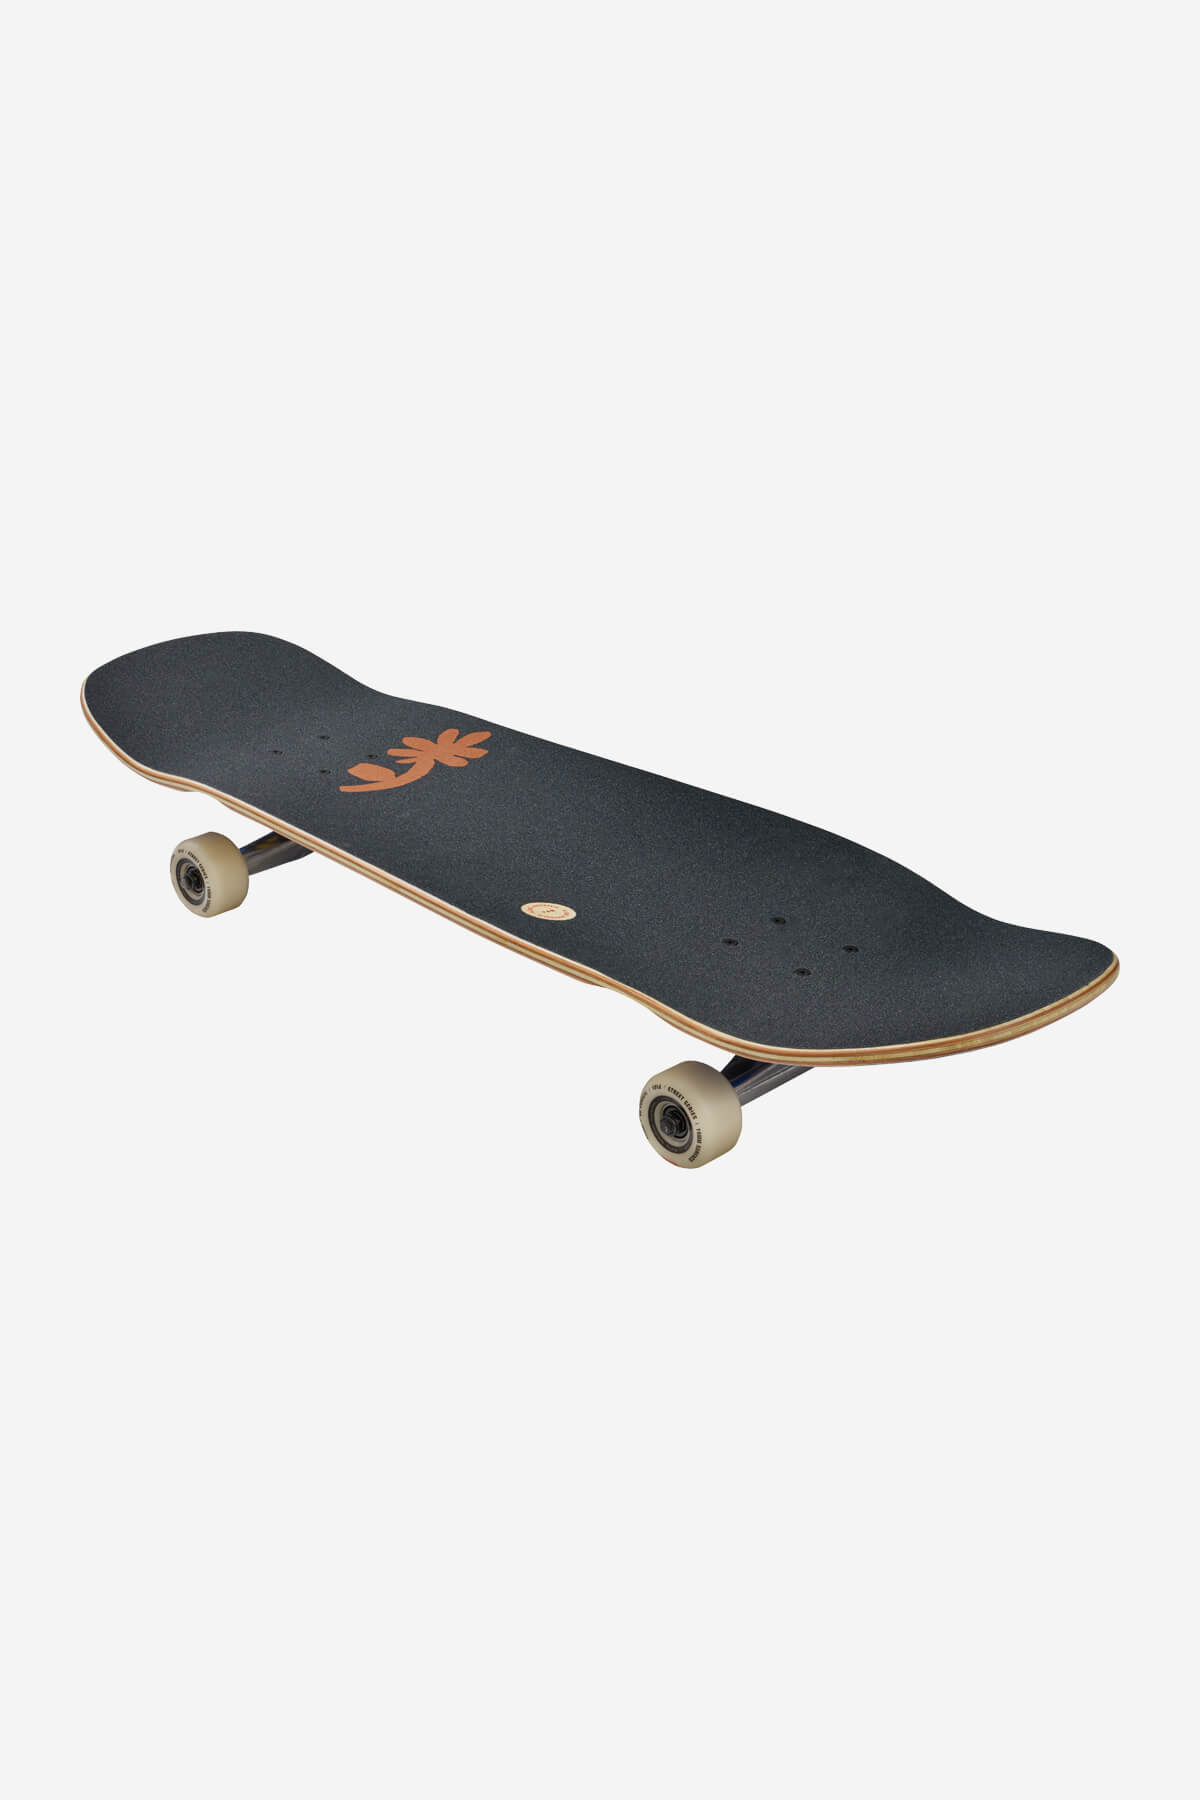 Globe - Huntsman - Bambú/Play - 9,75" Completo Skateboard